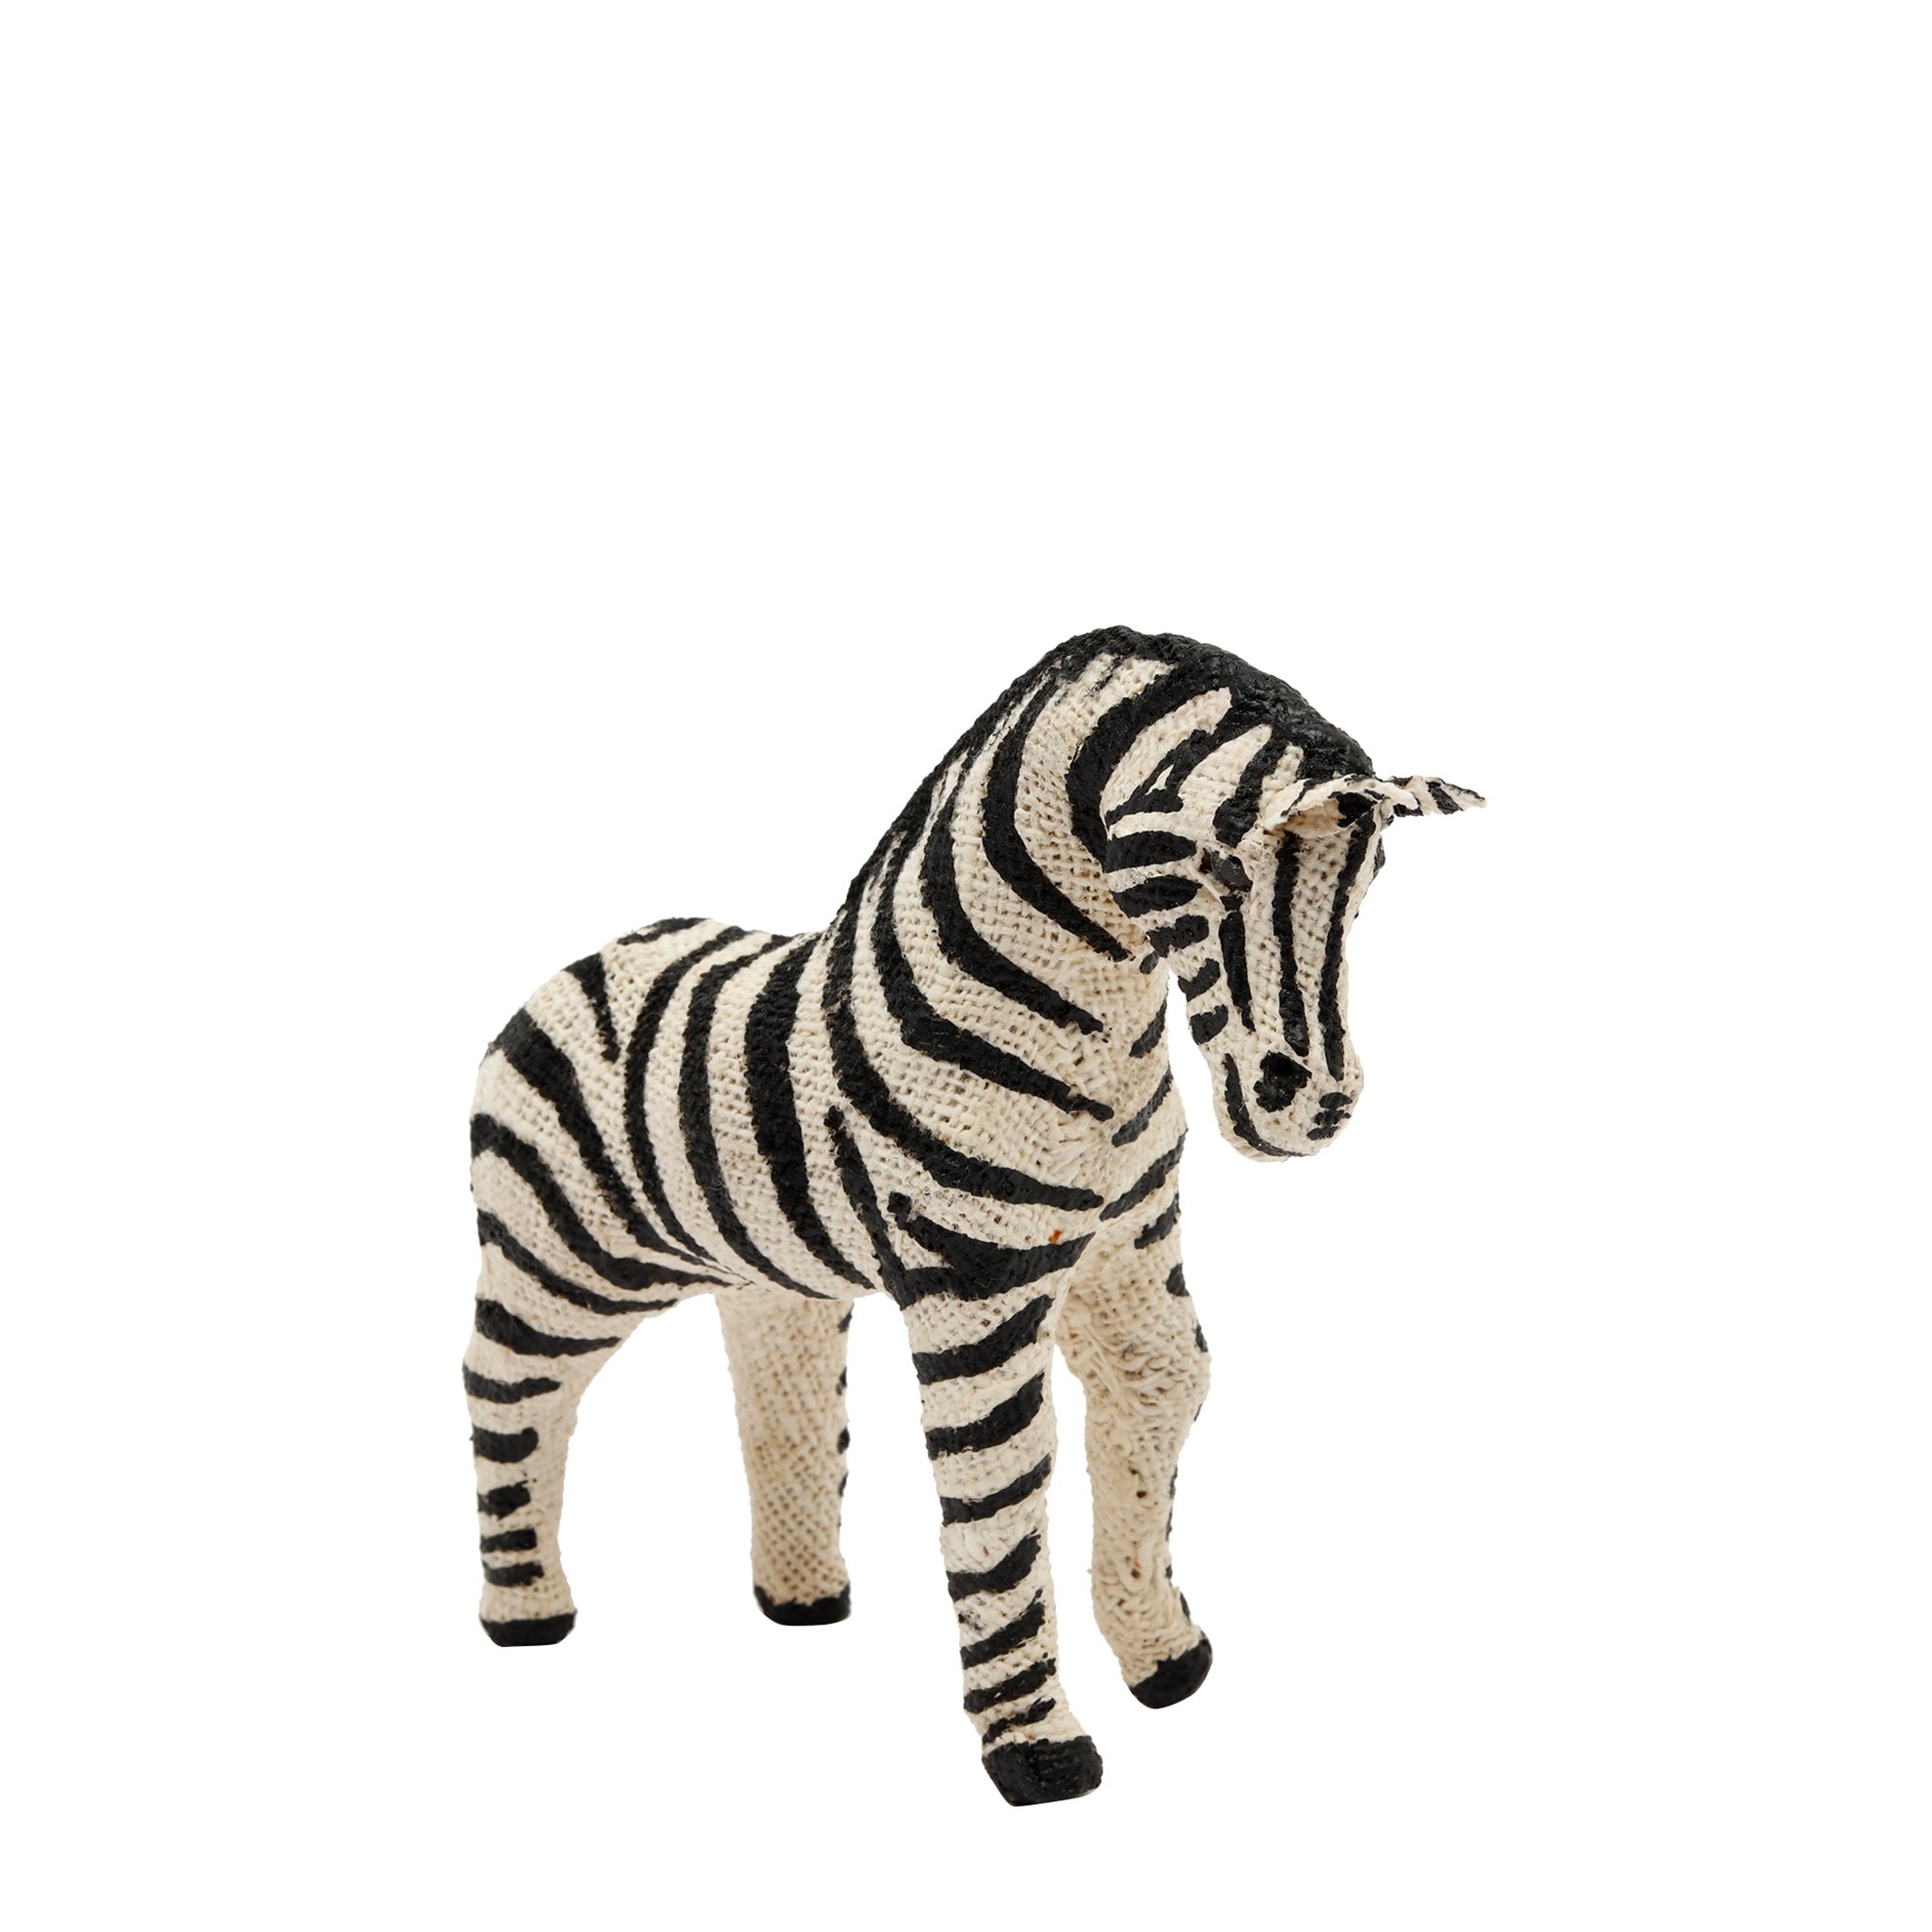 Dekoratif Obje - Zebra (5x18x16cm)